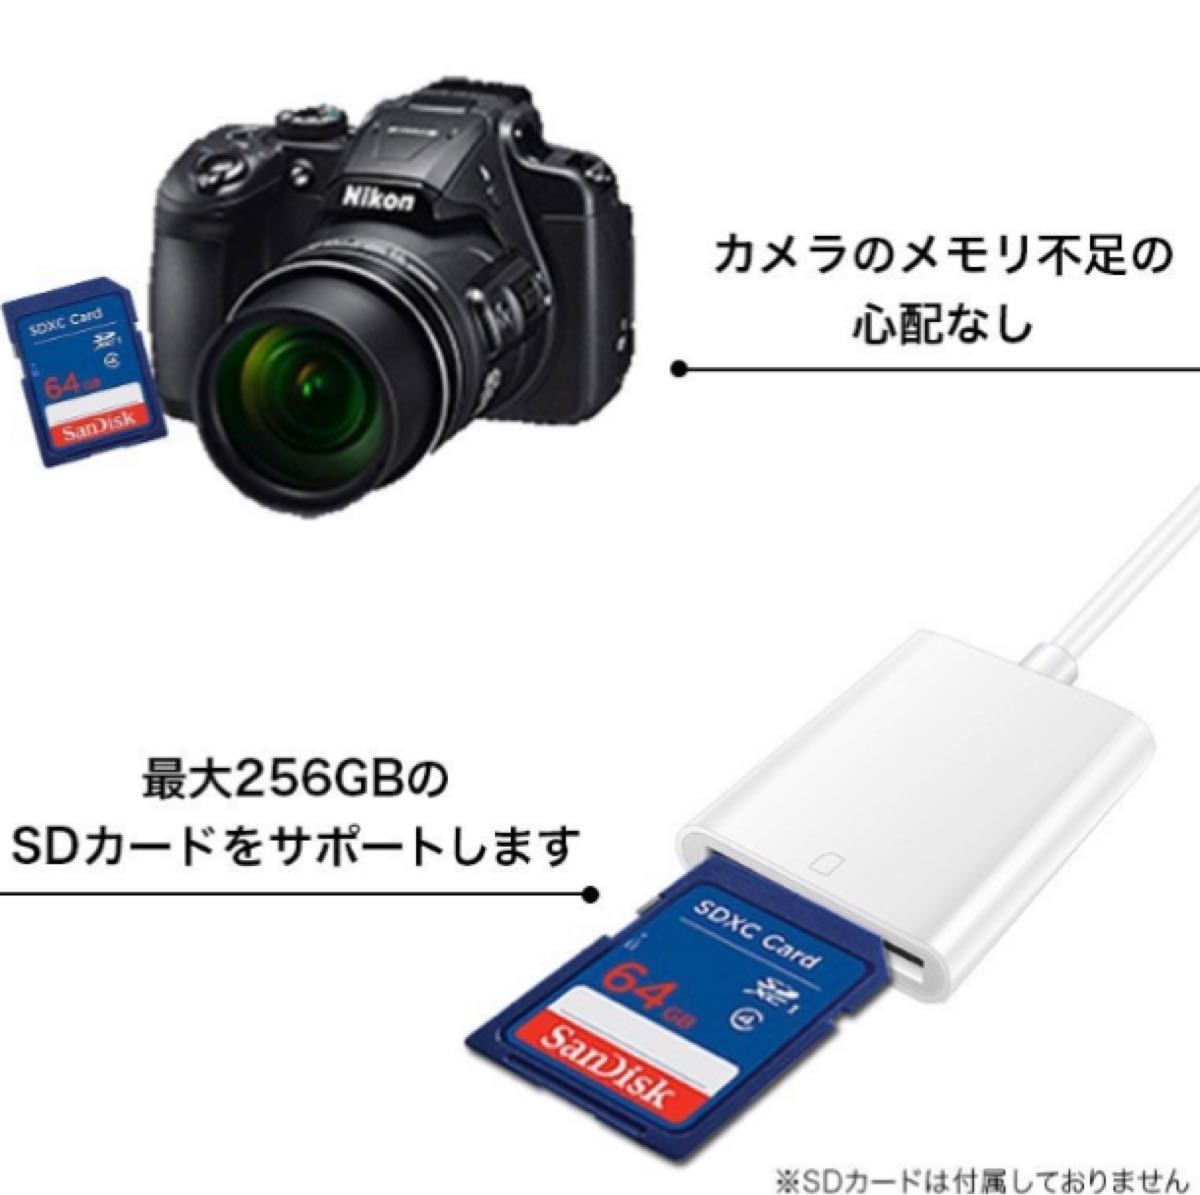 iPhone SDカードリーダー SDカード iPhone iPad アップル製品専用 写真転送 データ転送 